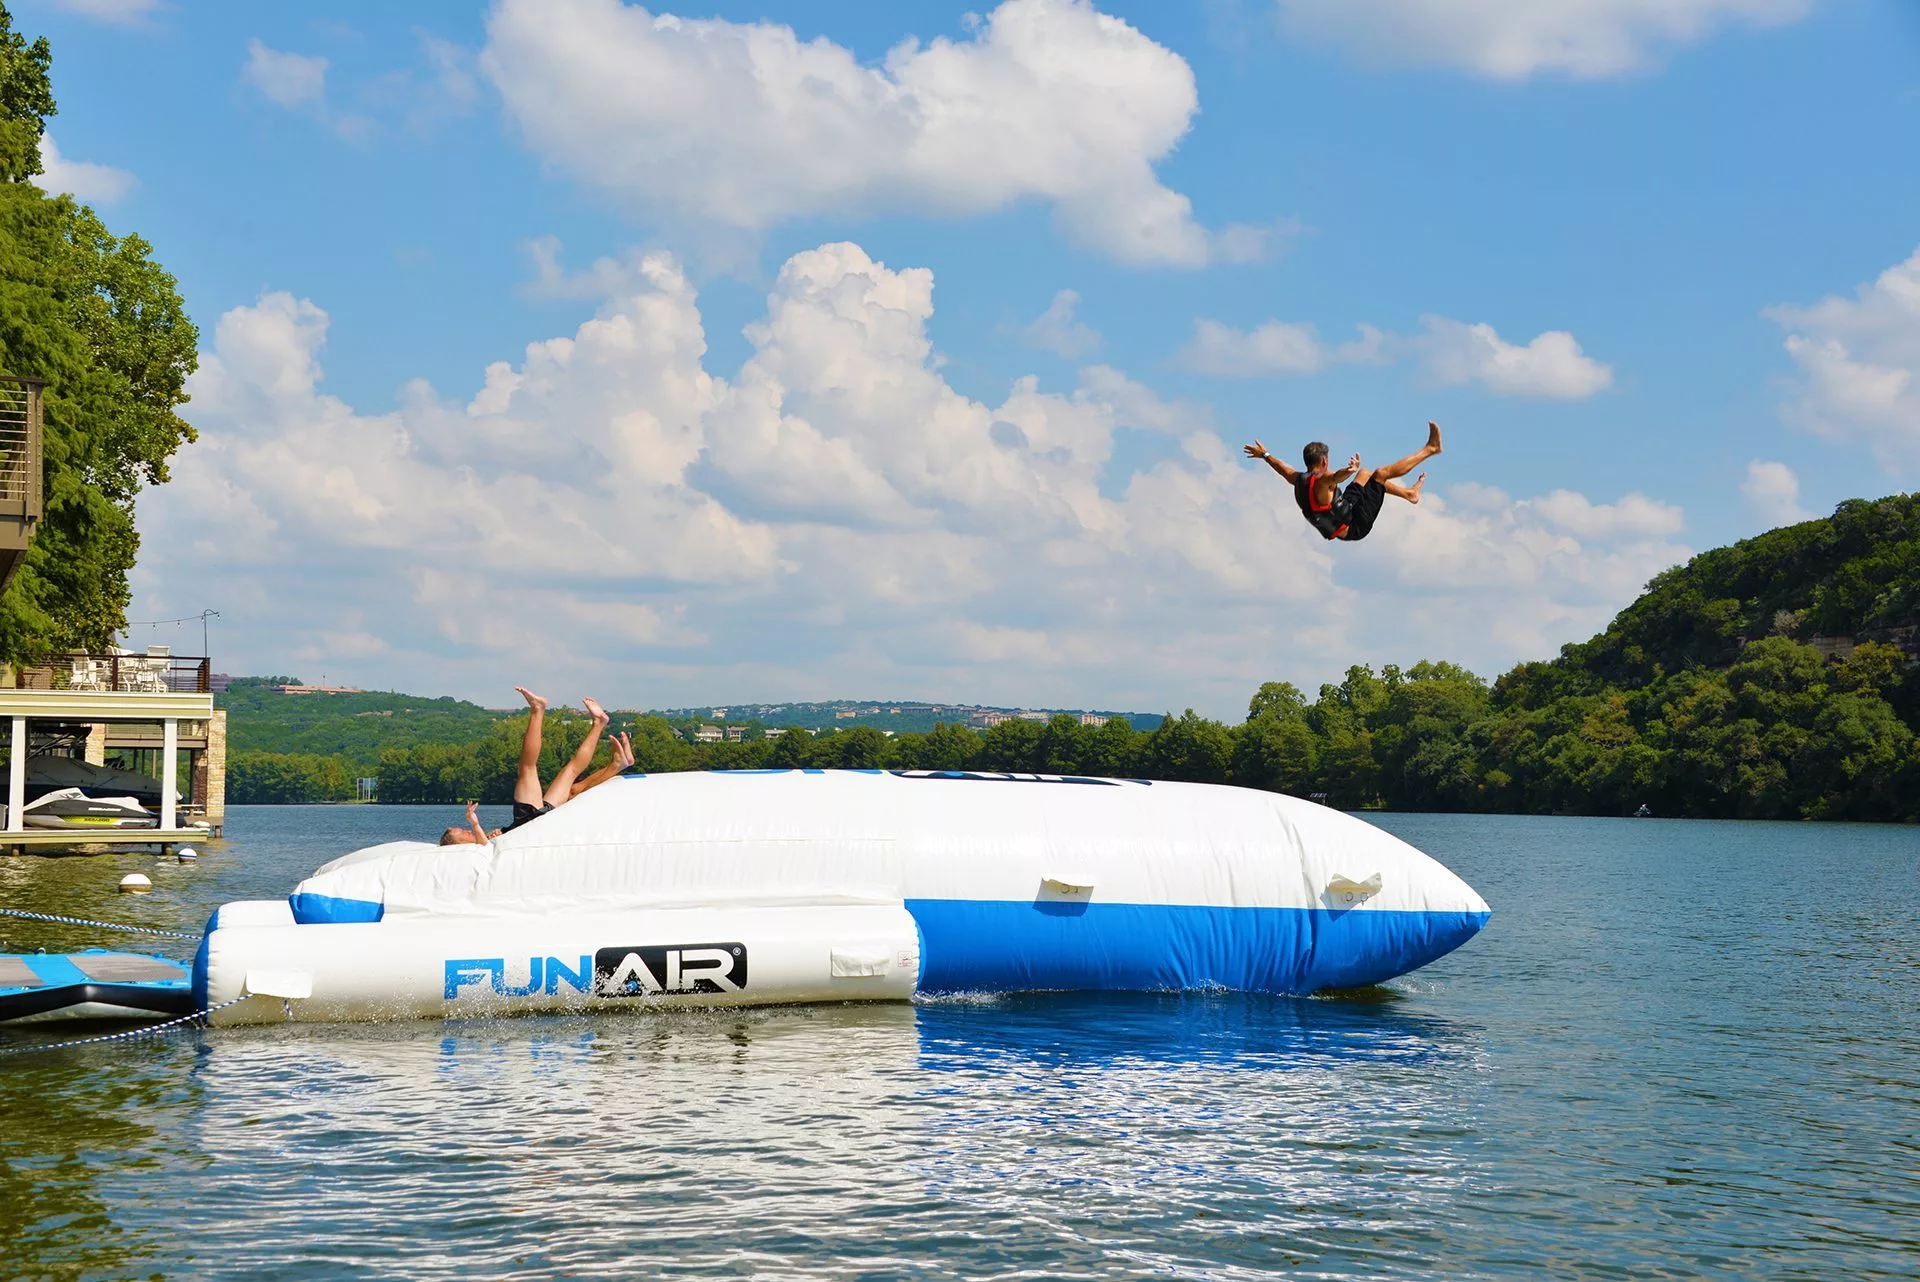 BigAir Blob bounce into a lake